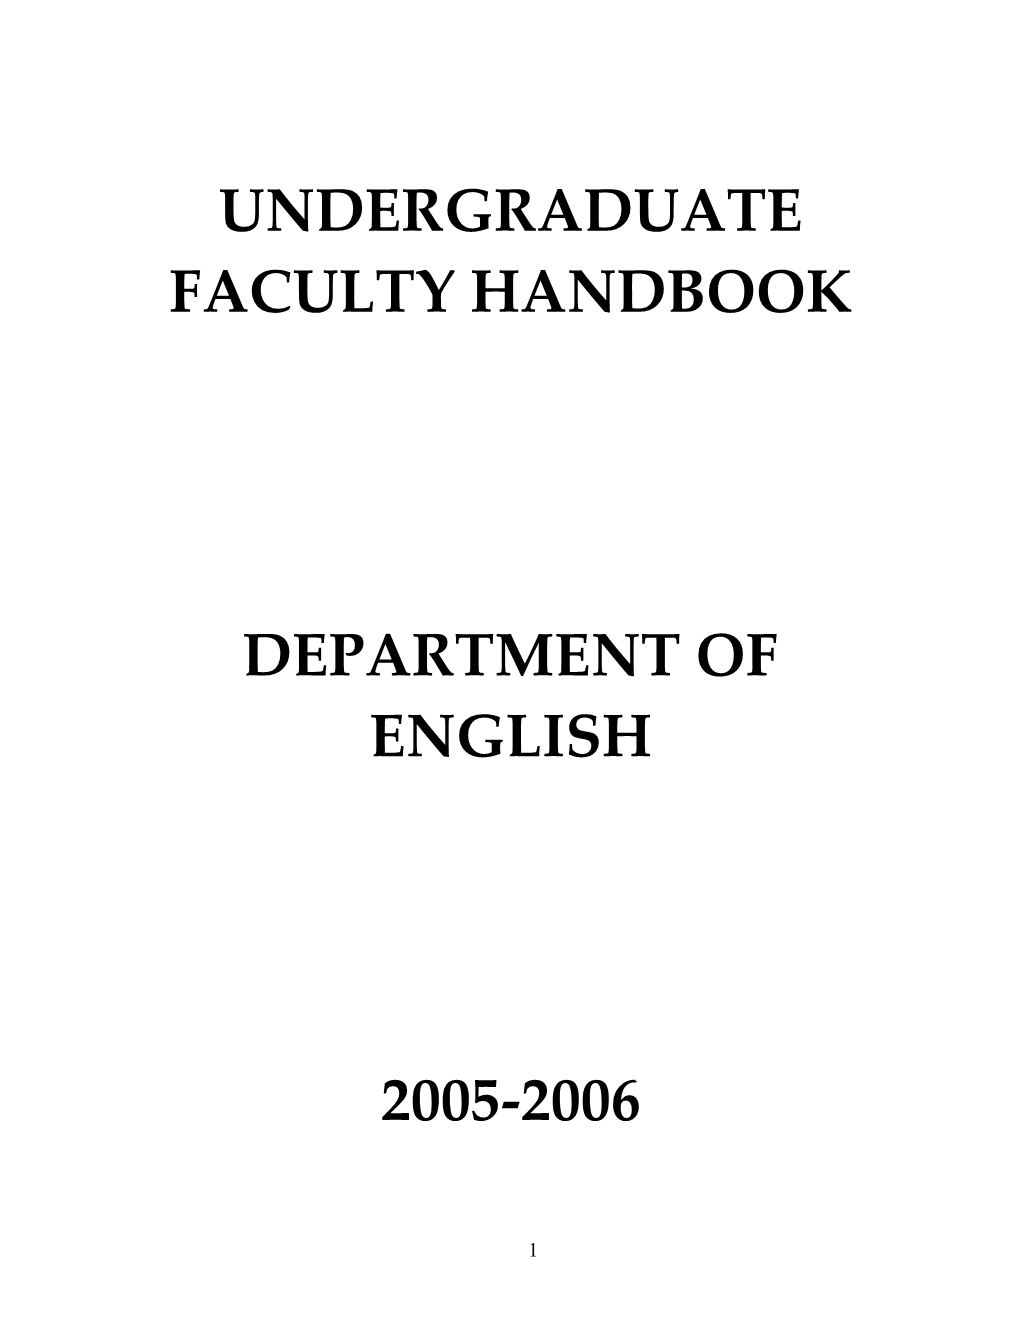 Undergraduate Faculty Handbook